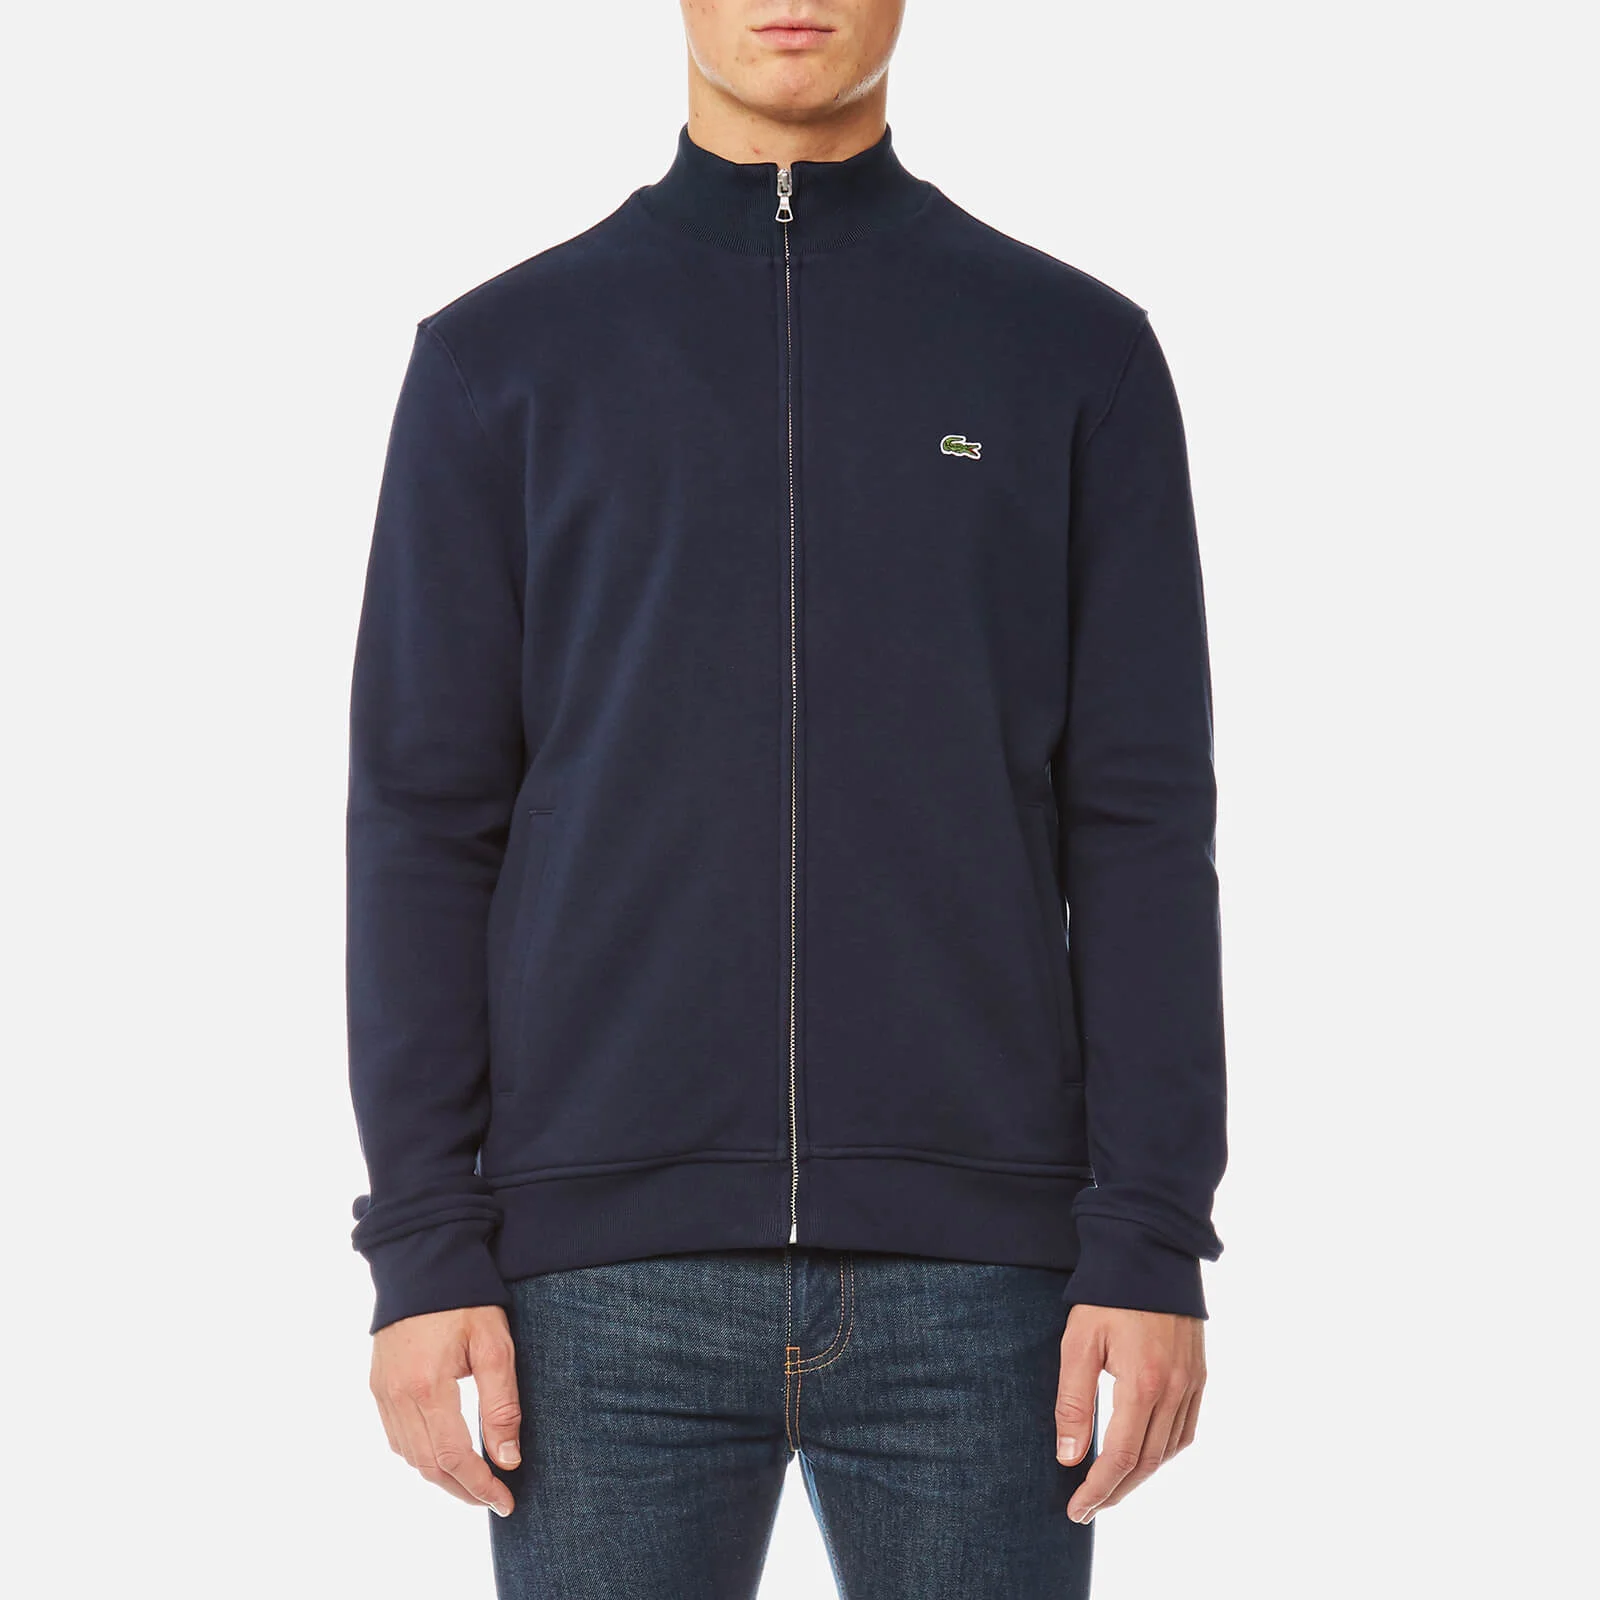 Lacoste Men's Zipped Sweatshirt - Navy Blue/Multico Image 1